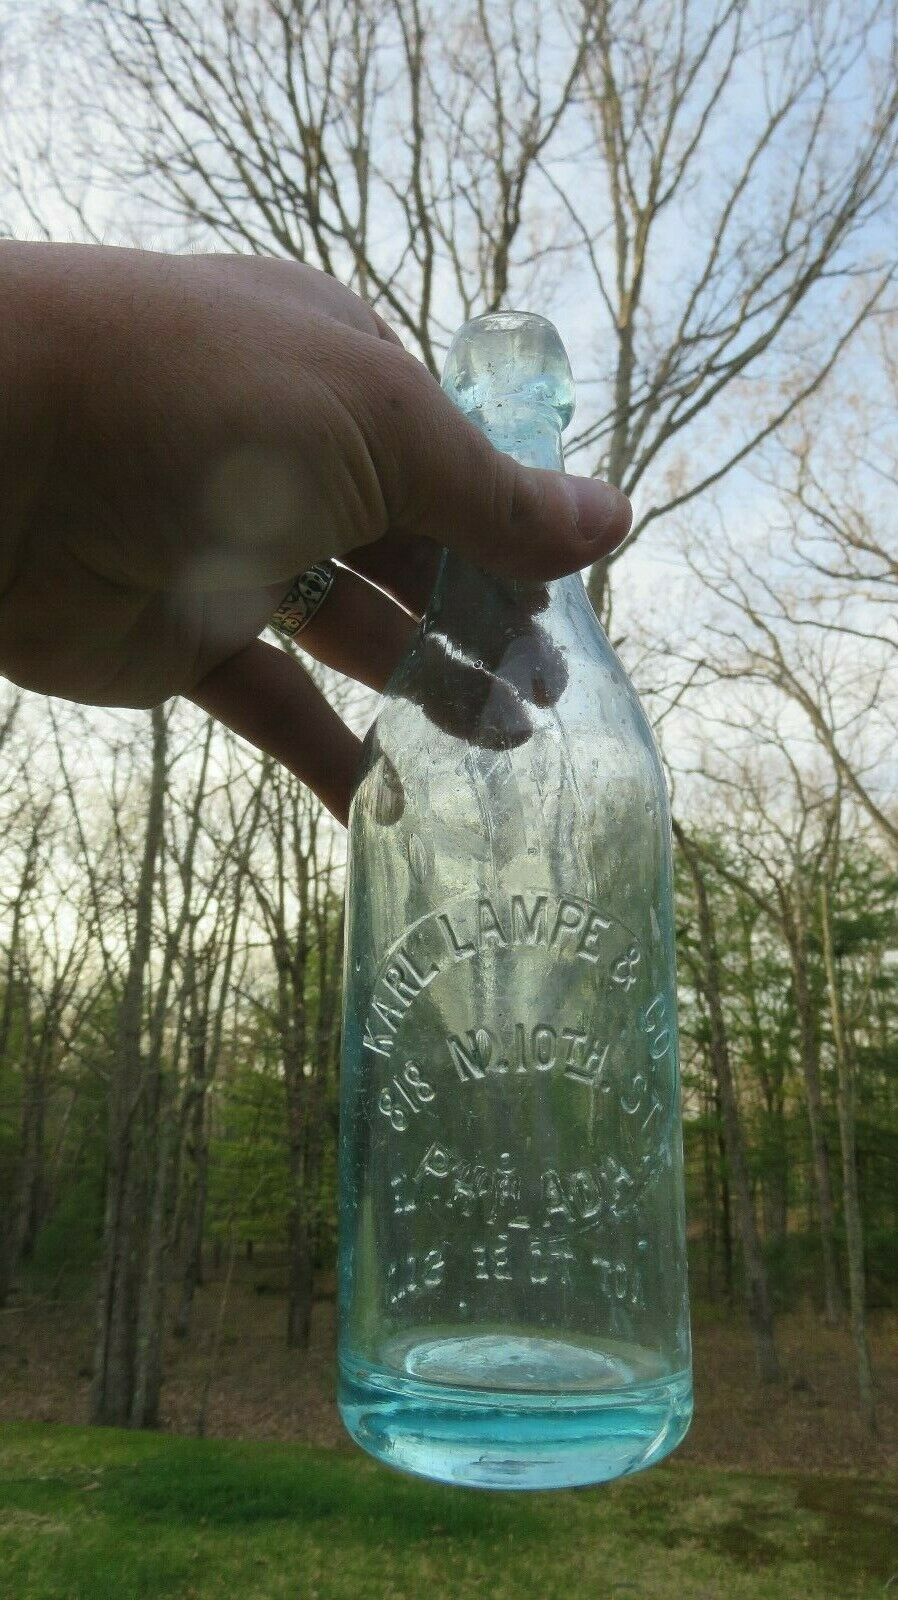 Antique Blob Top Karl Lampe Aqua Bottle Philadelphia Pa 1800s 818 N 10th St